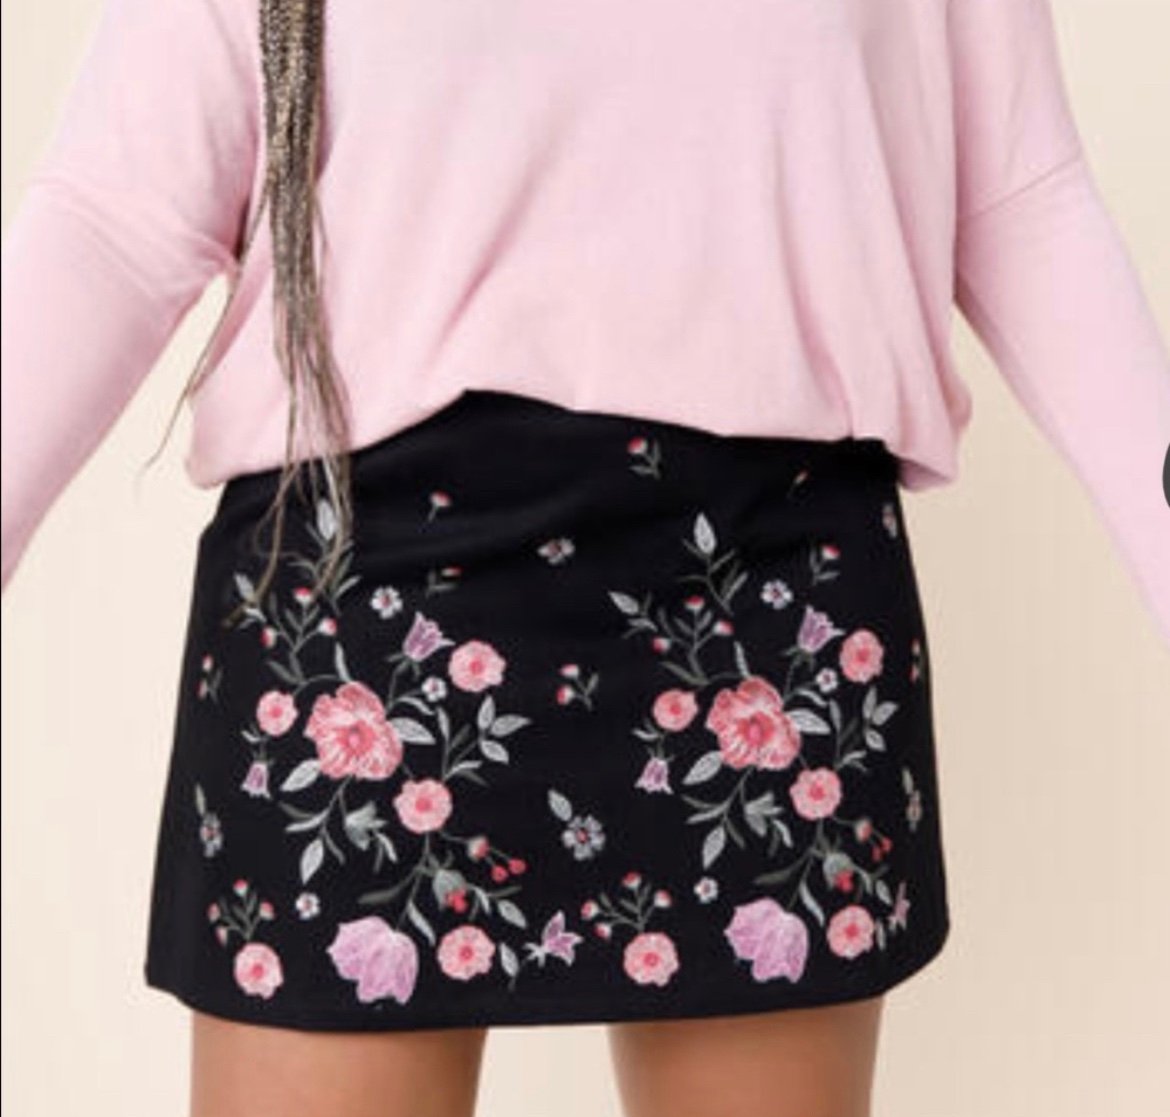 Cheap Francesca’s Floral Skirt kZiPxKbJy outlet online 